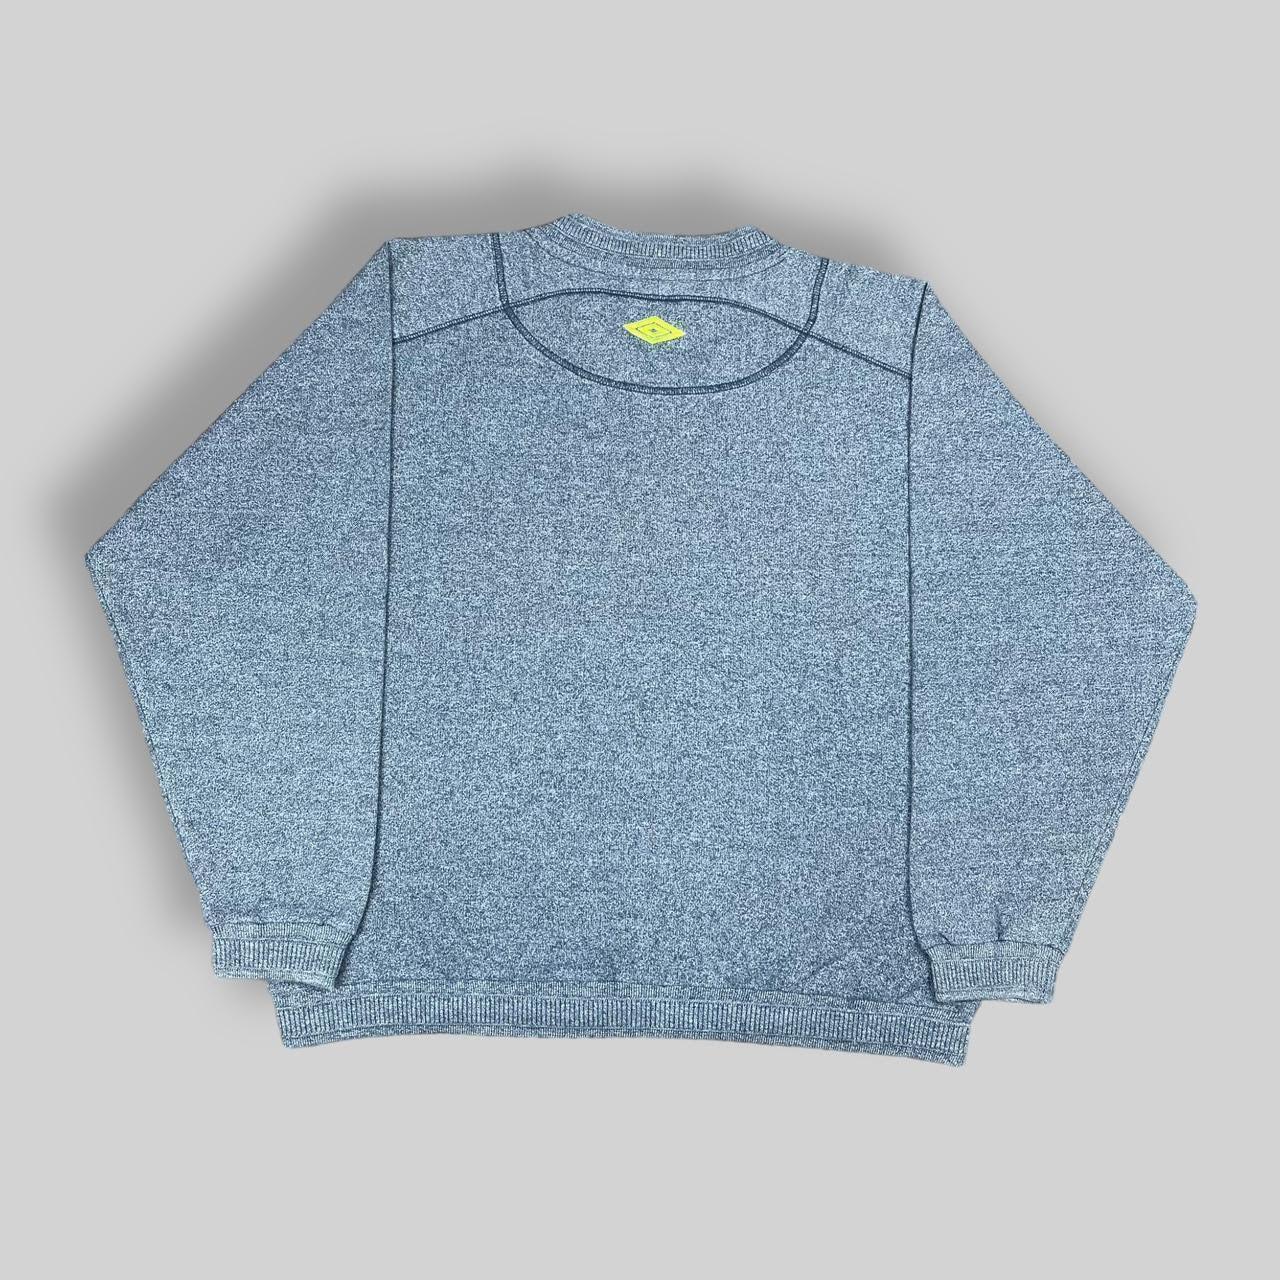 Vintage Umbro Spellout Sweatshirt (Medium)